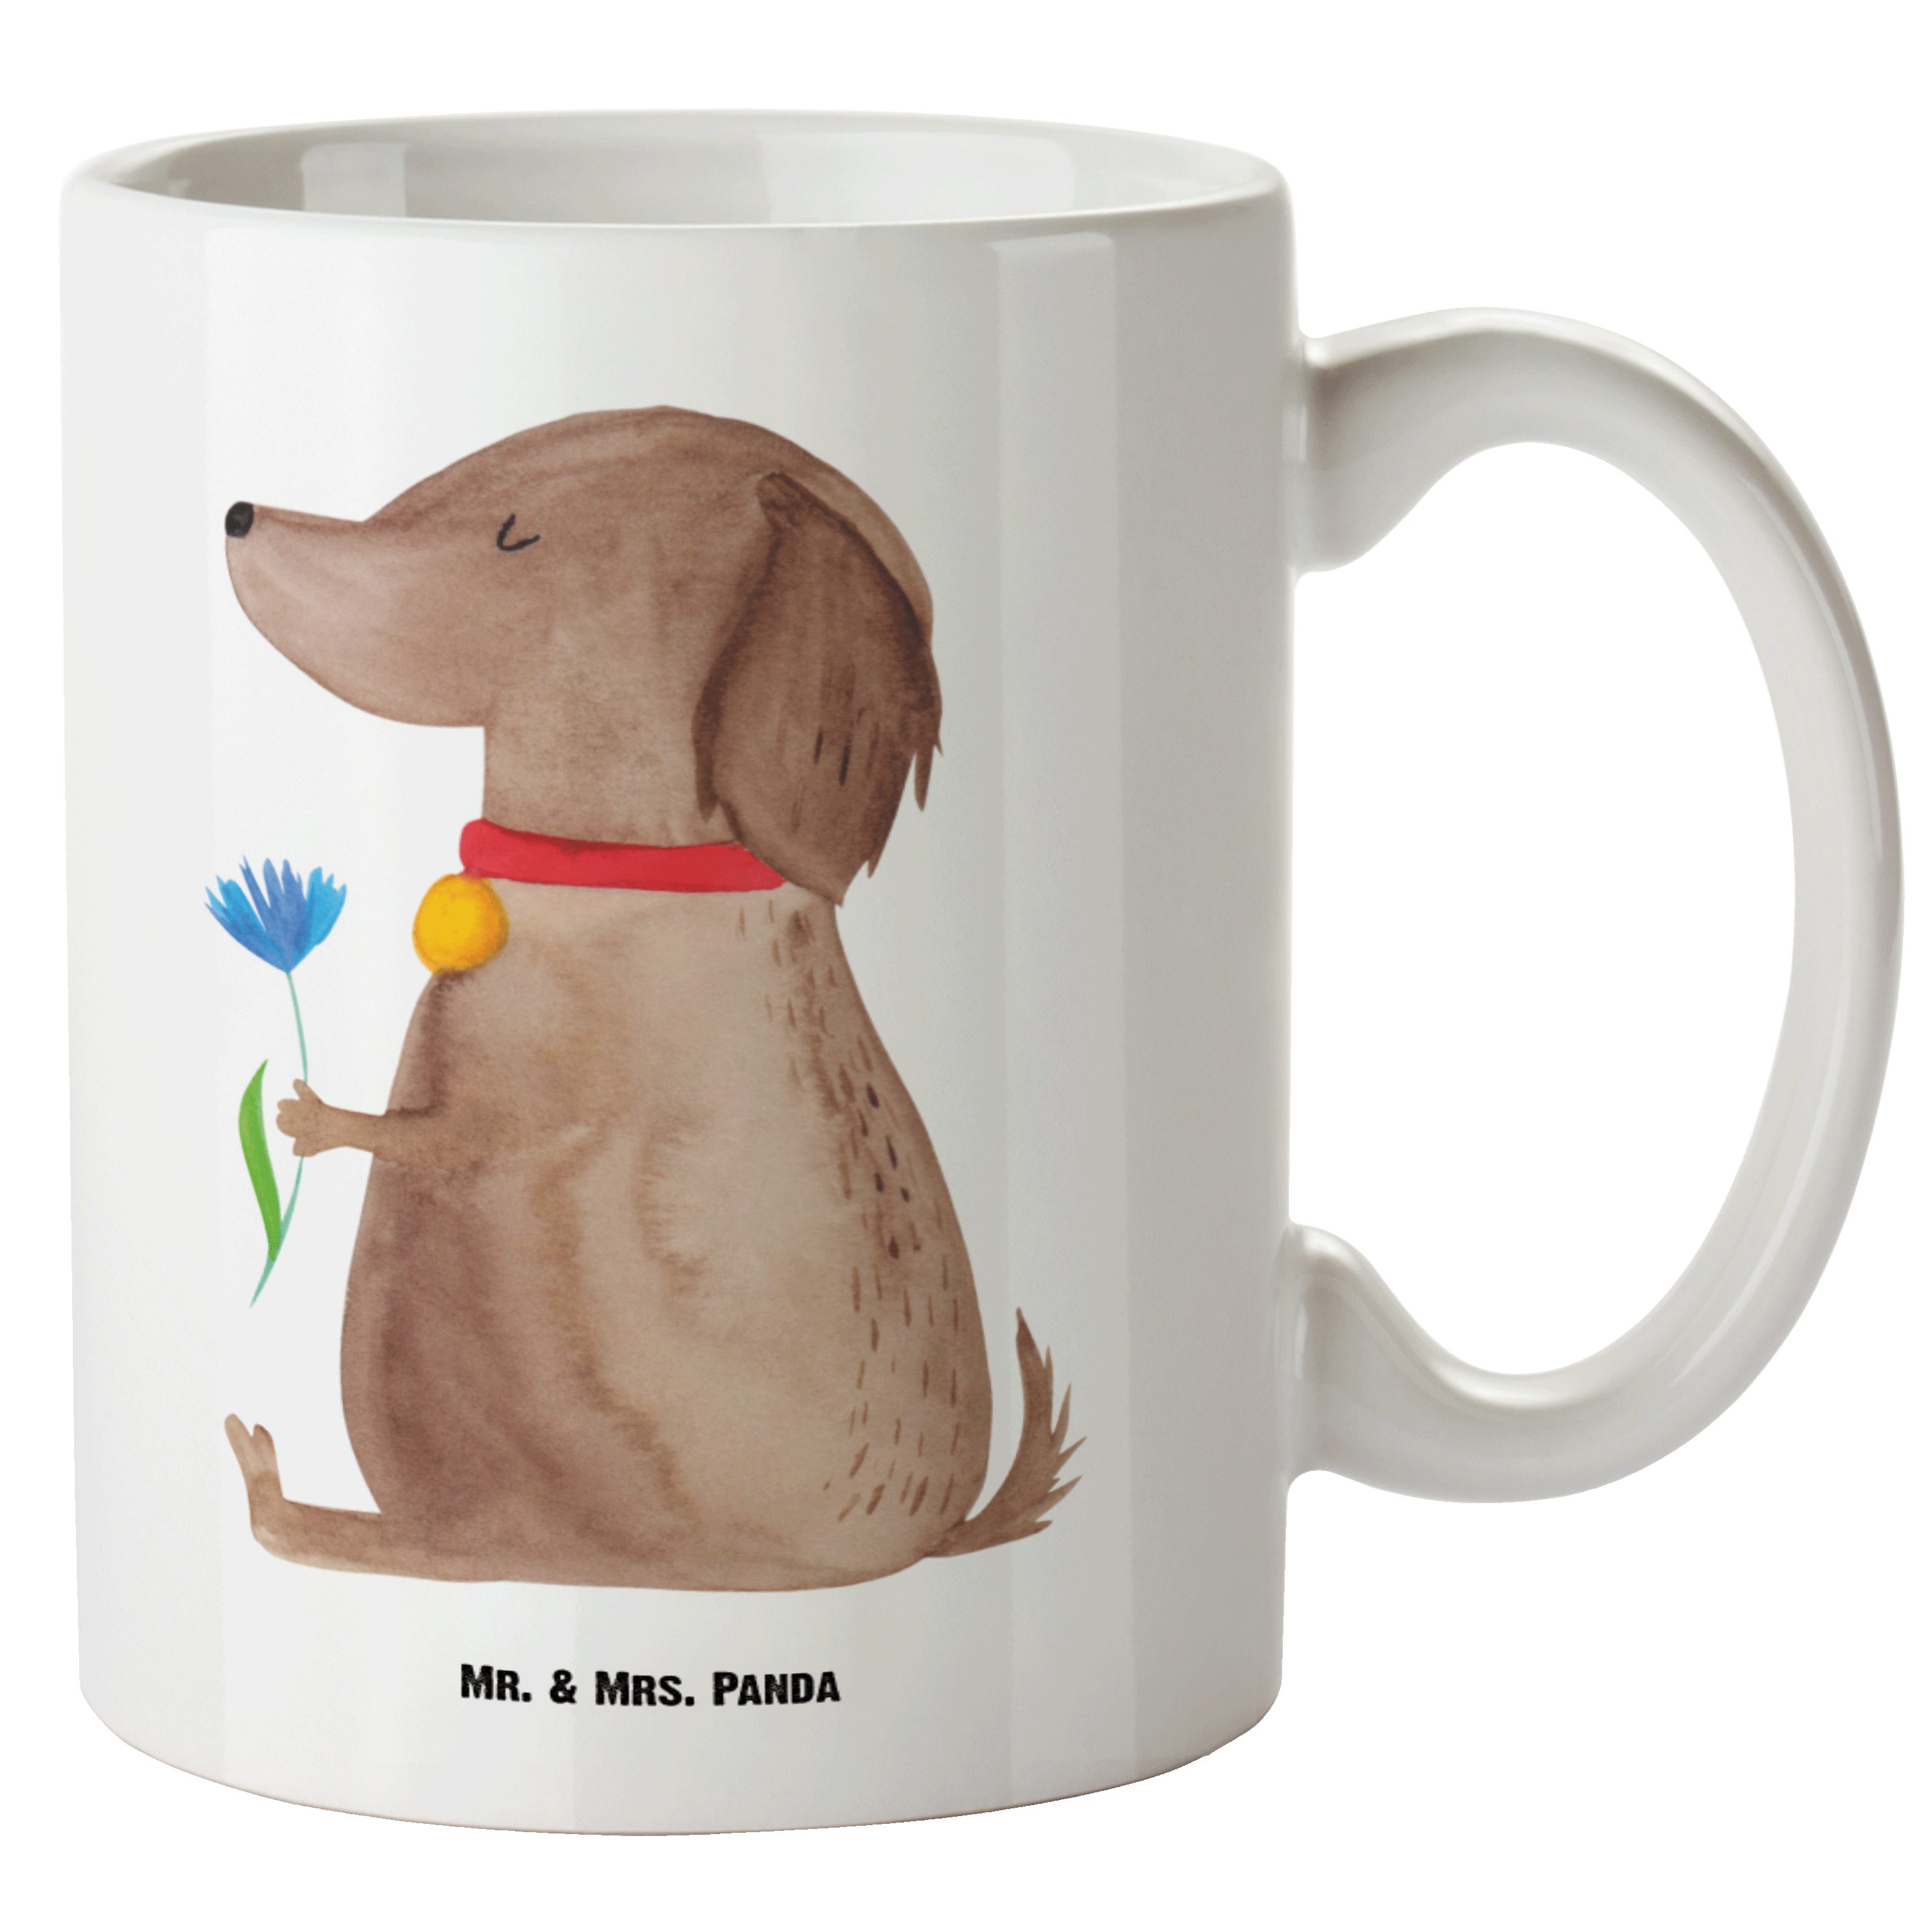 Mr. & Mrs. Panda Tasse Hund Blume - Weiß - Geschenk, Hundeliebe, Grosse Kaffeetasse, Hundesp, XL Tasse Keramik